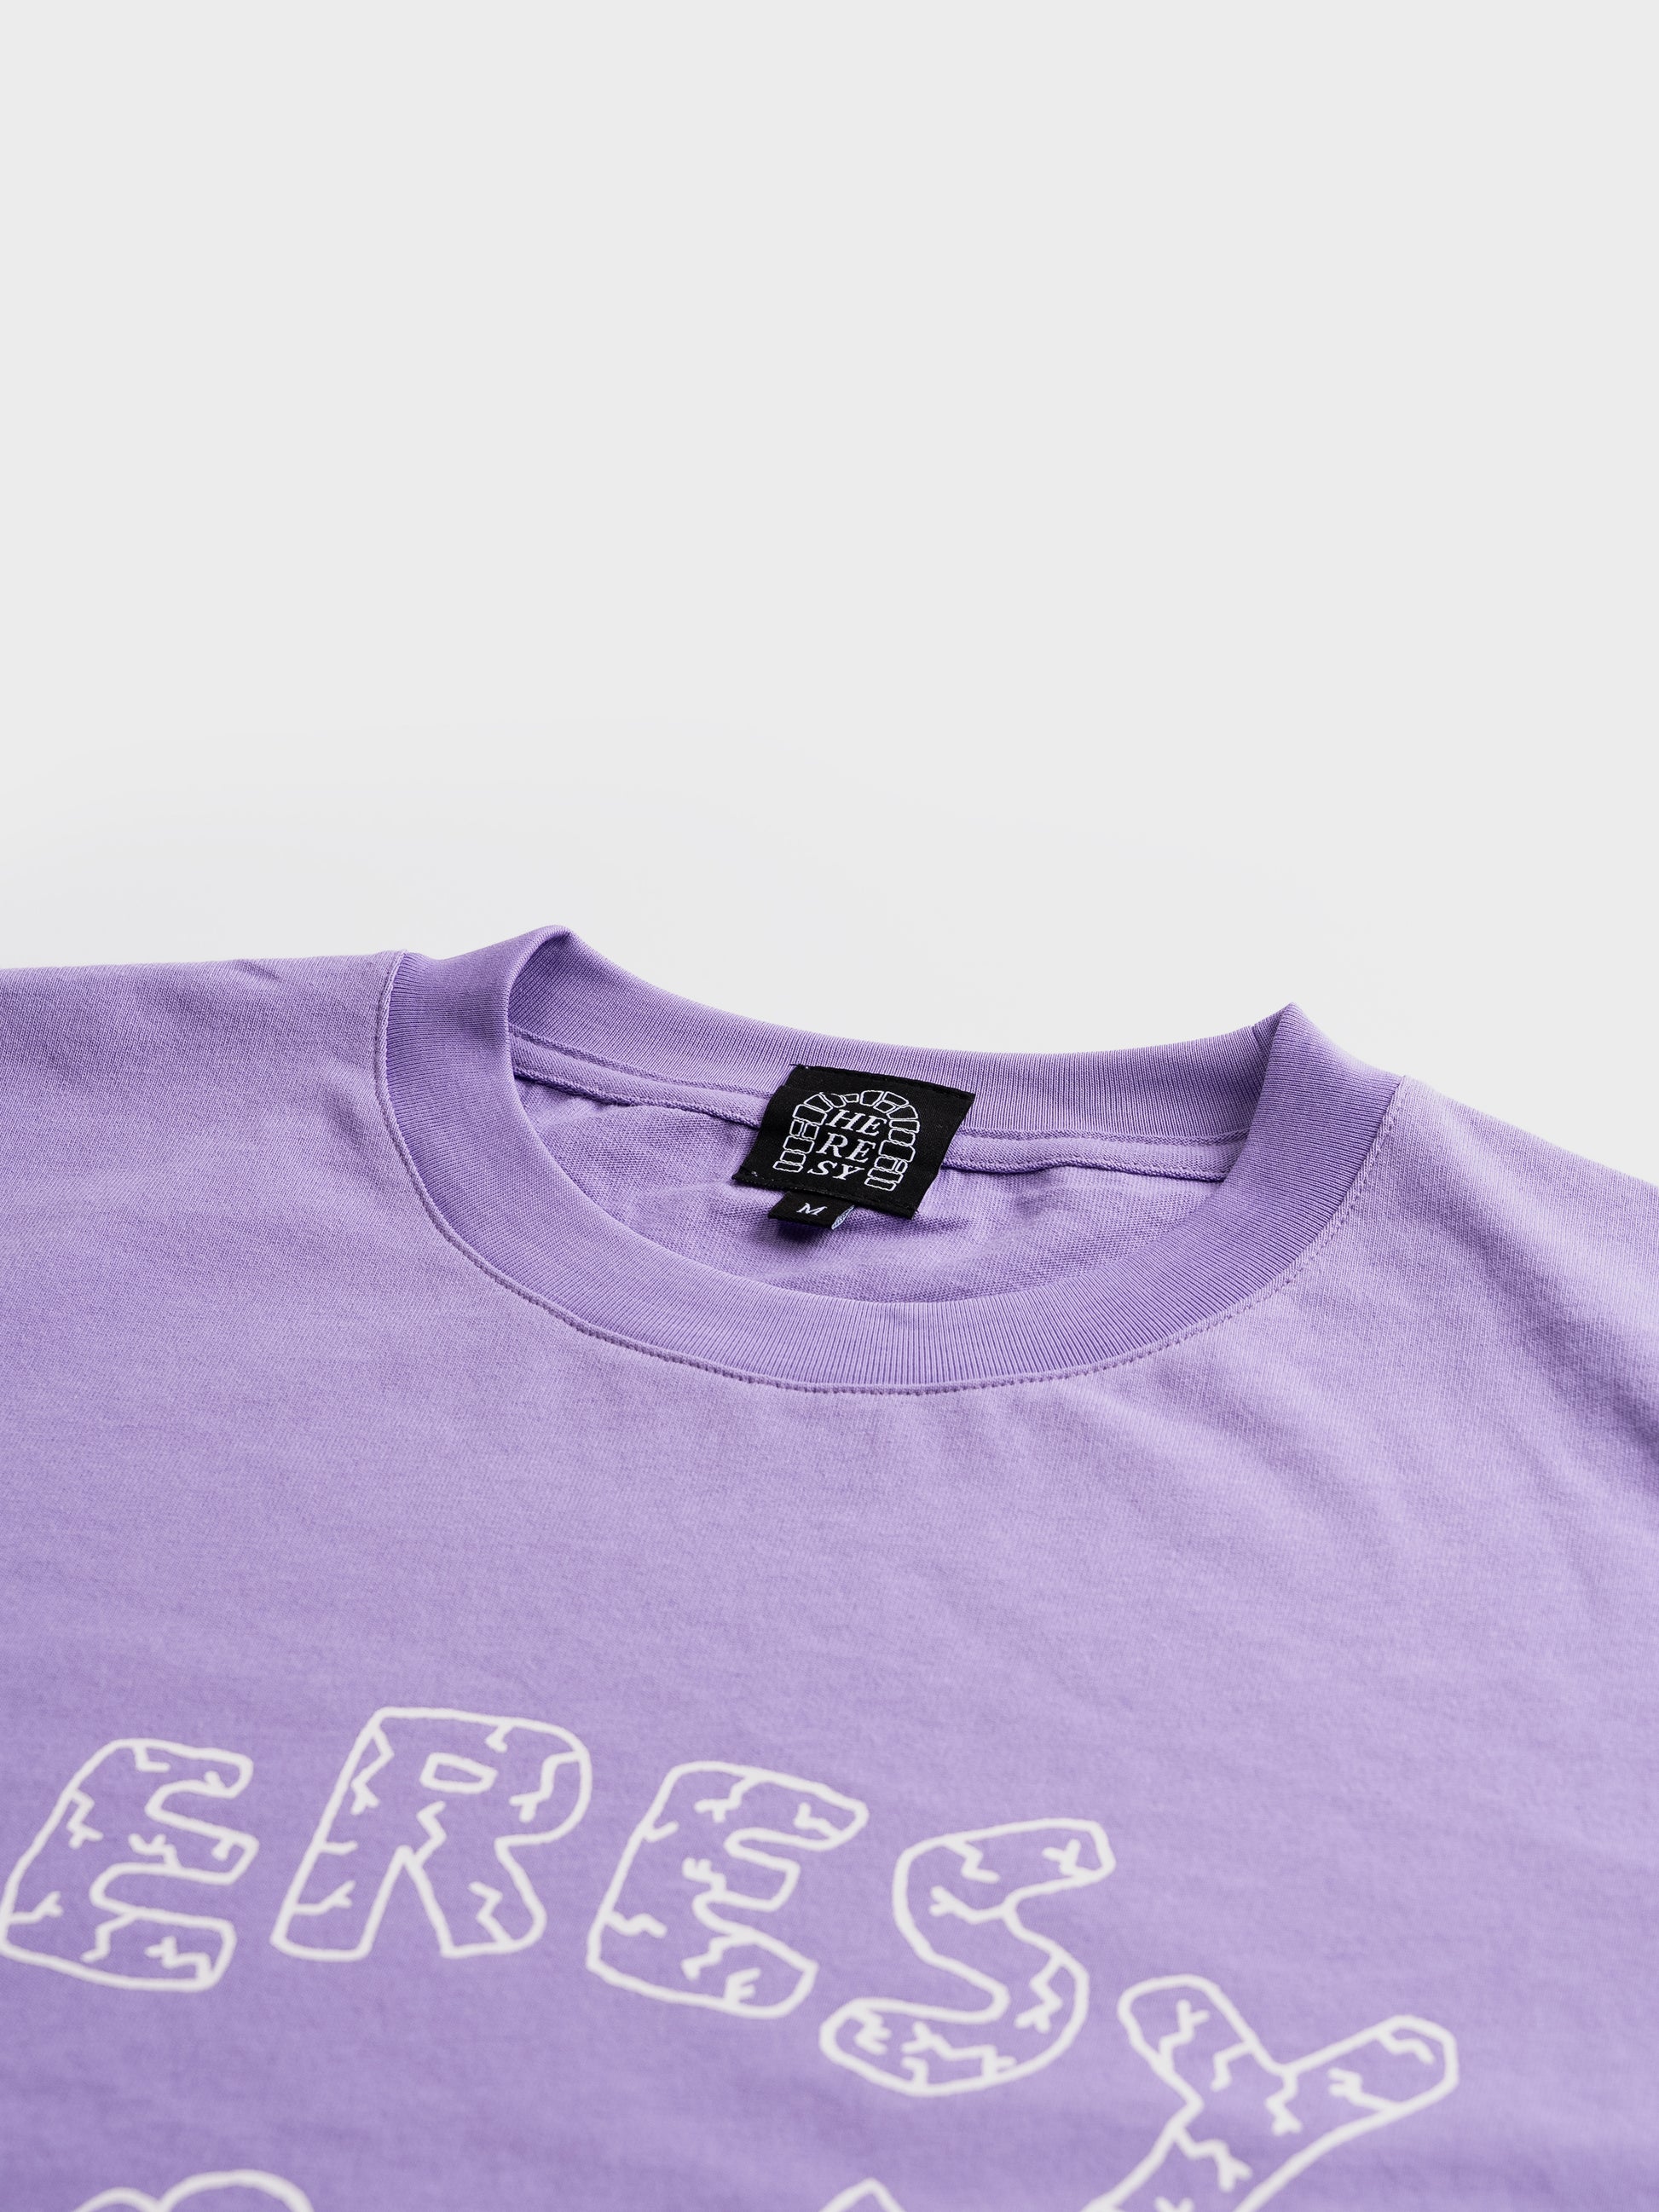 Heresy Naturist T-Shirt - Lavender